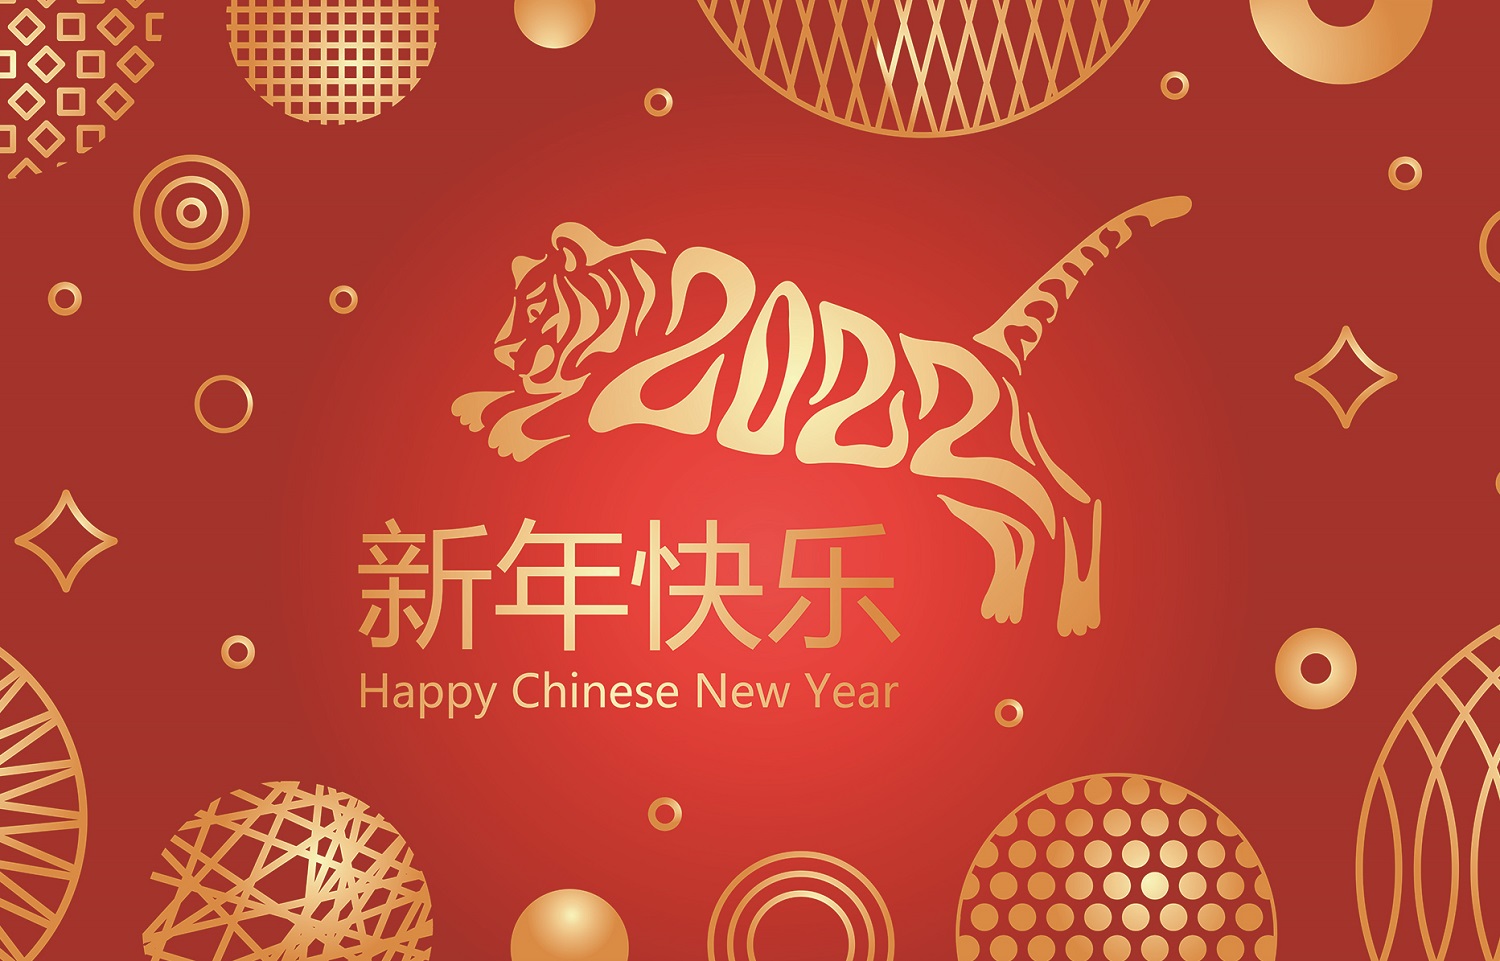 Horóscopo chino 2022: Año del Tigre, predicciones por signo